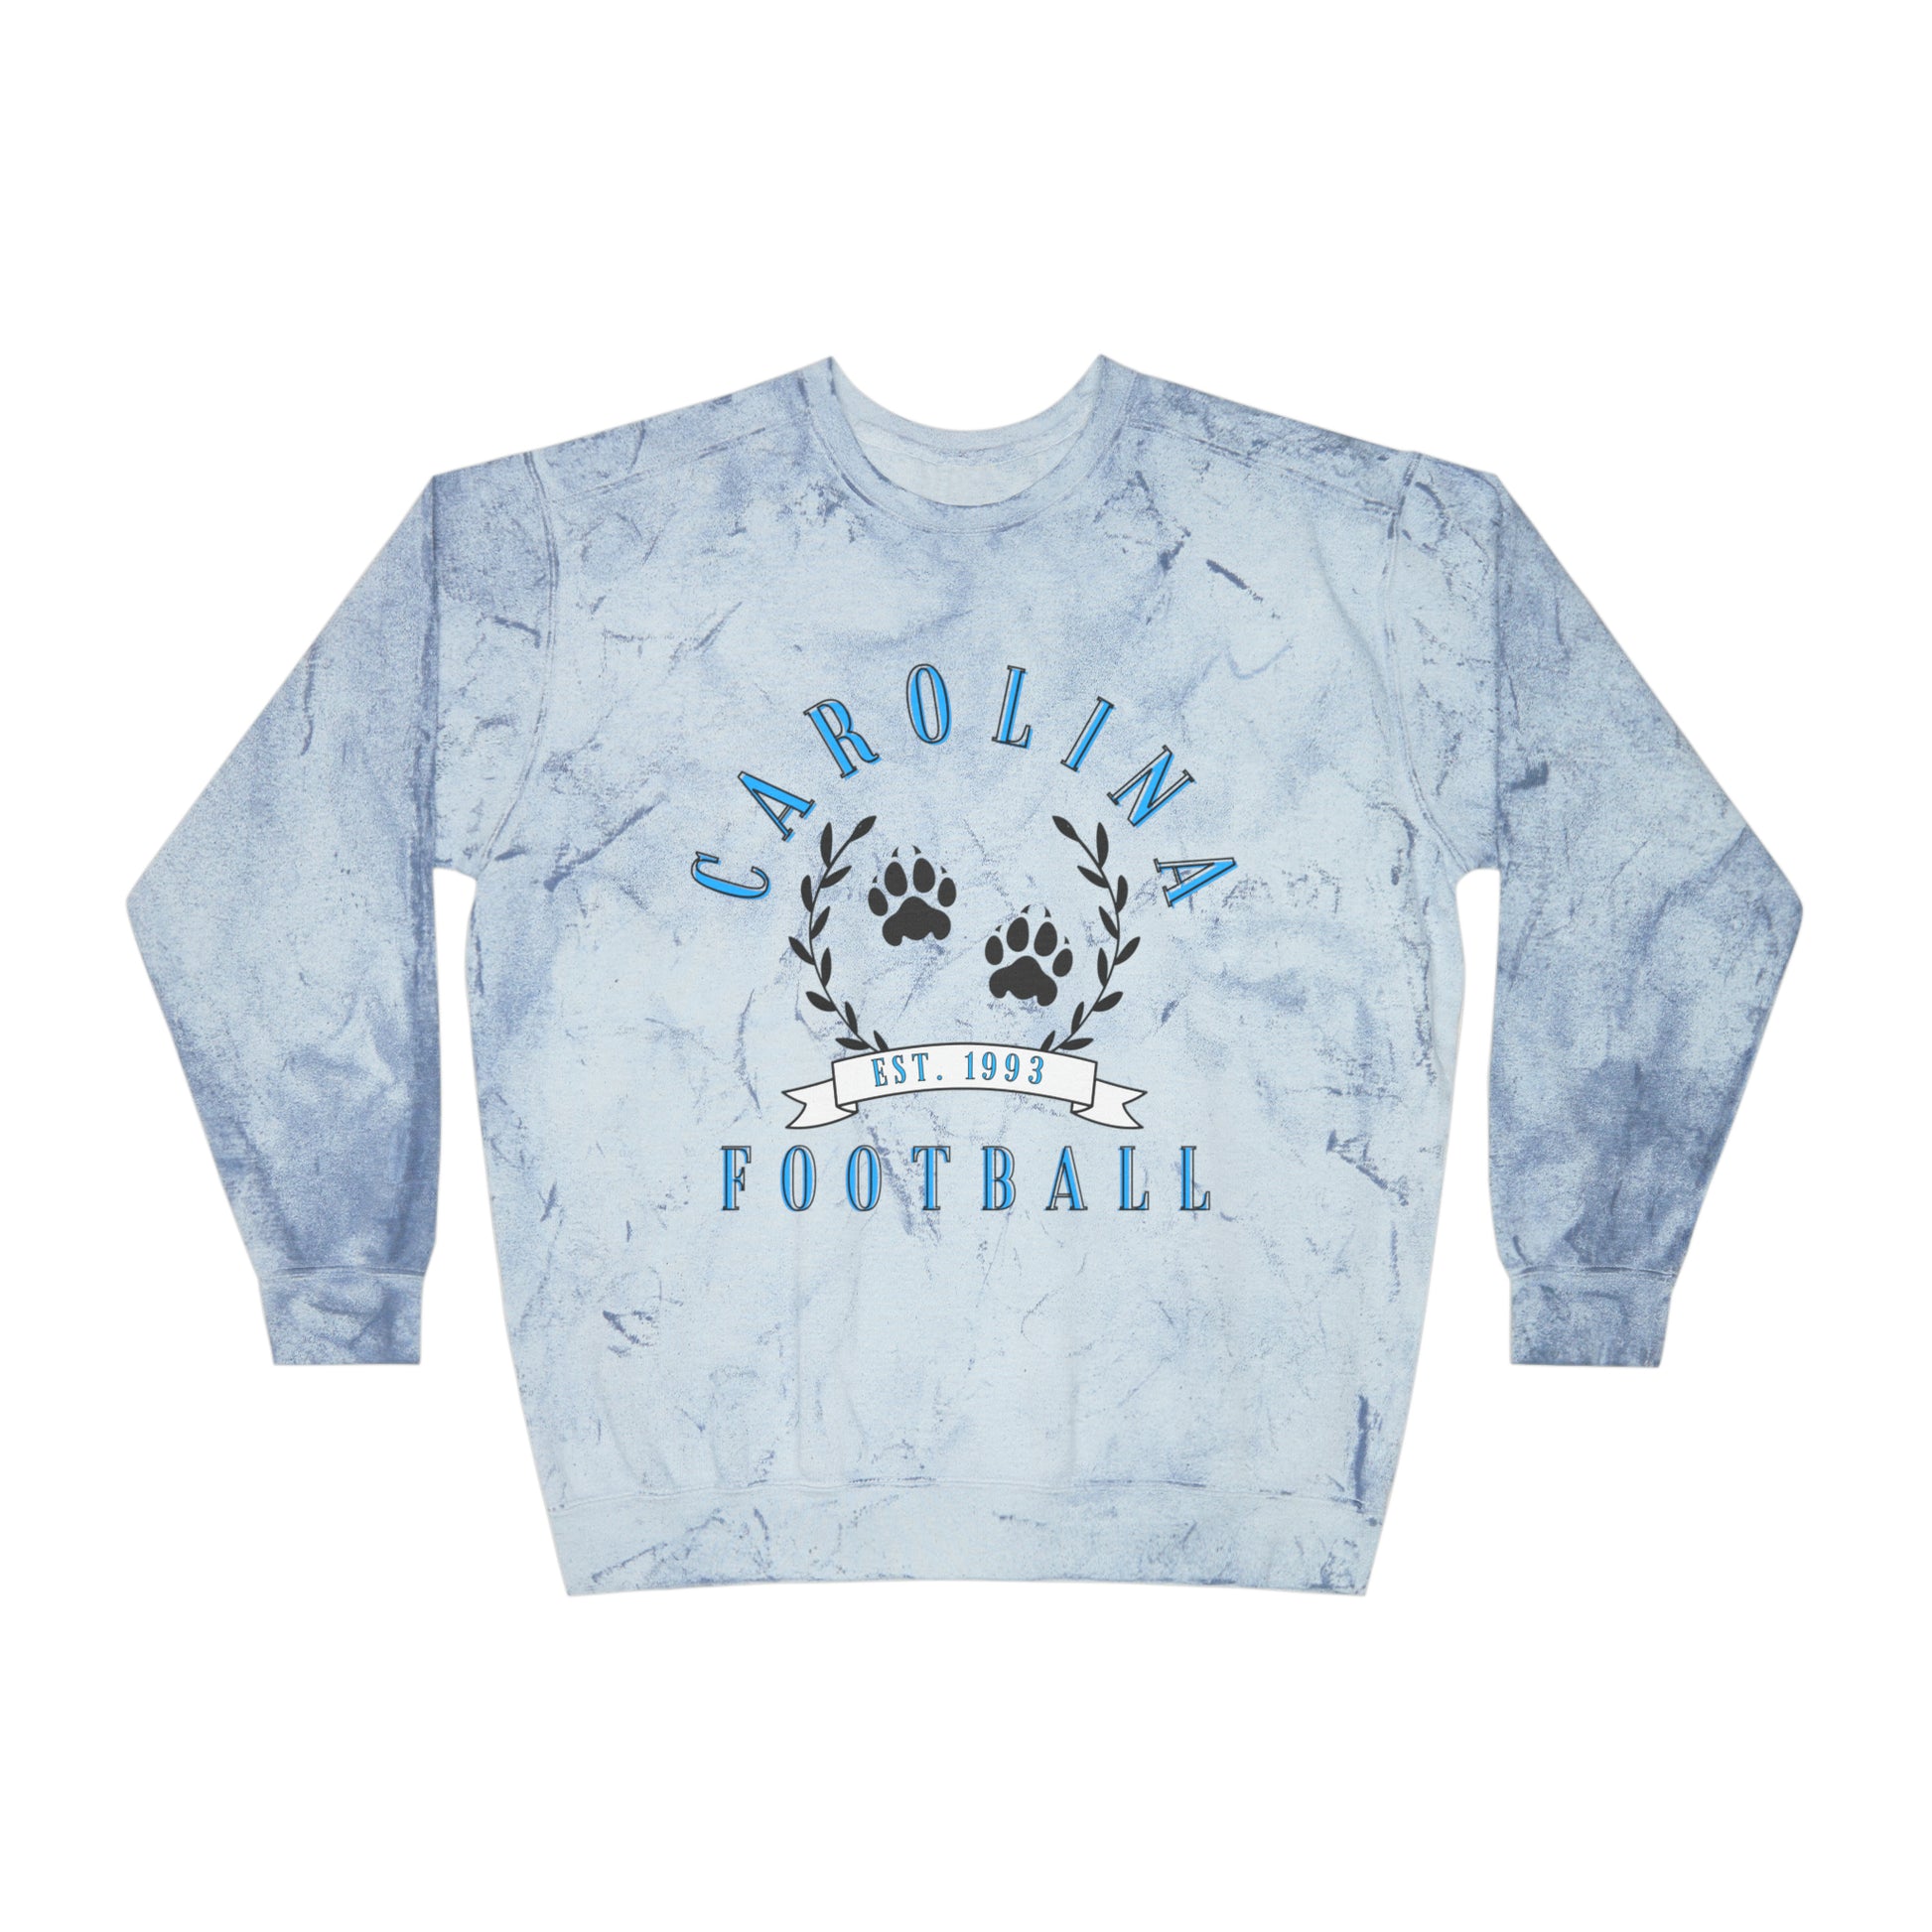 Tie Dye Carolina Panthers Crewneck Sweatshirt - Vintage NFL Football Hoodie Apparel - Retro Hippy Men's Women's - Design 3